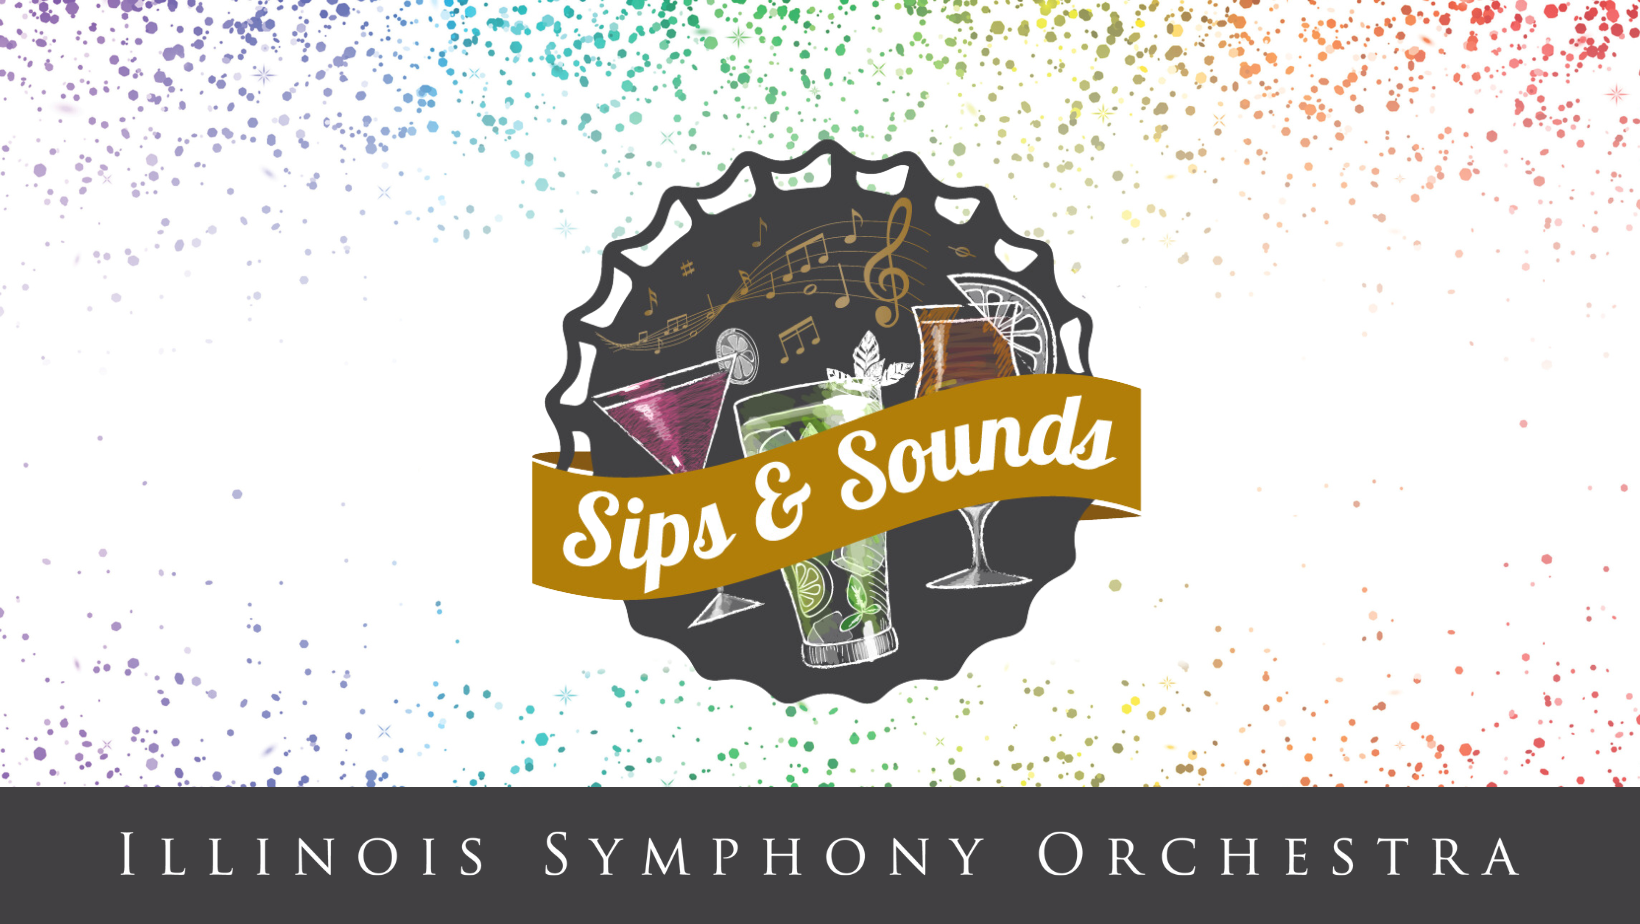 Sips and Sounds - String Quartet